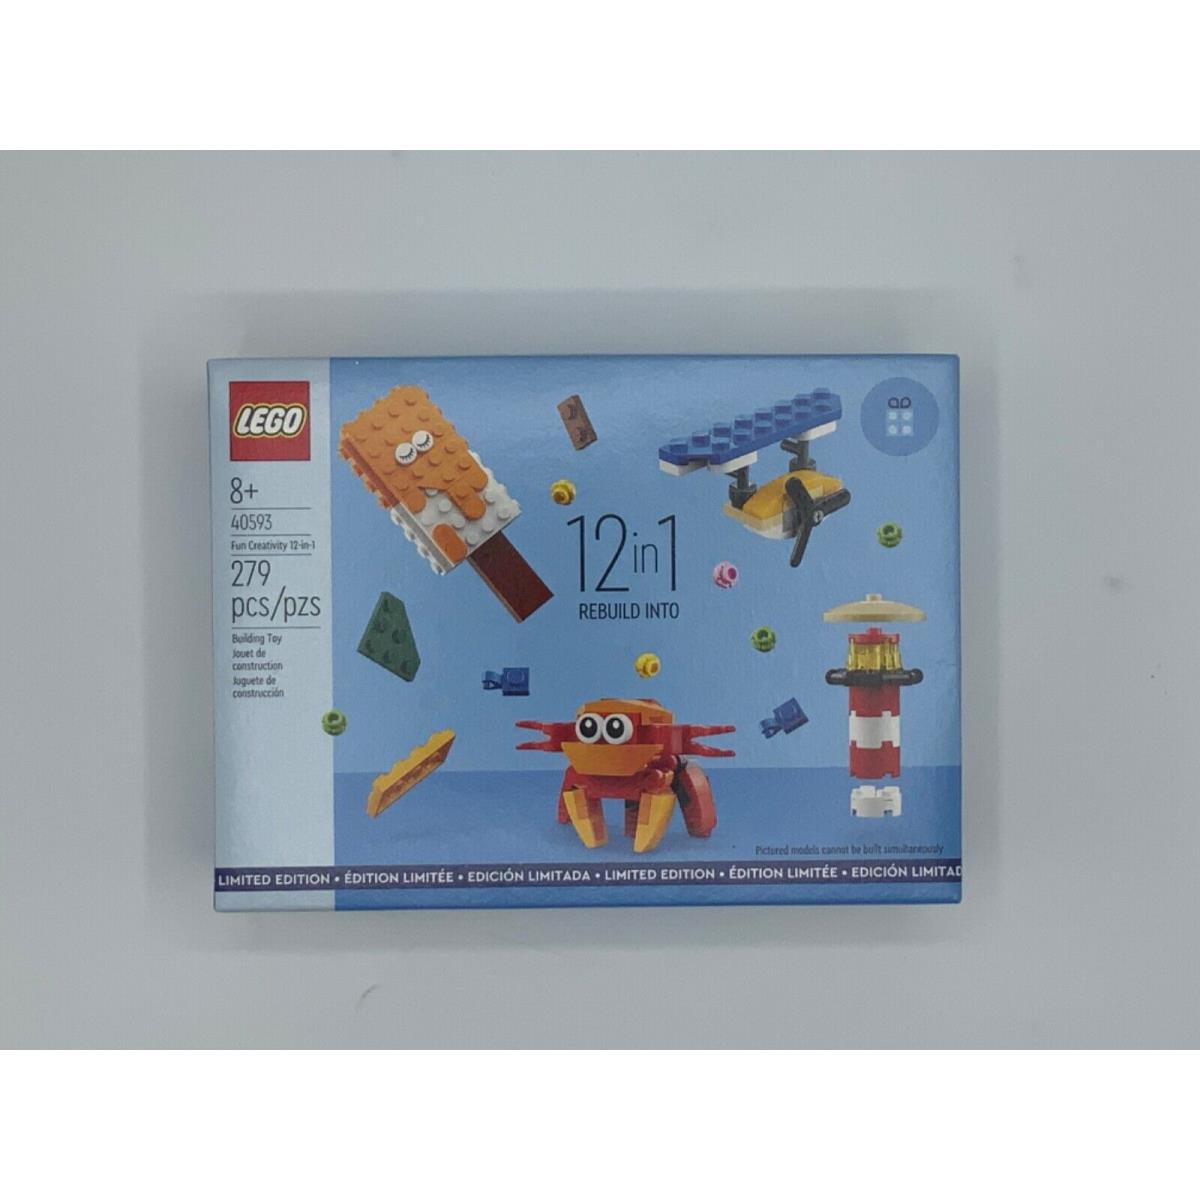 Lego 12 in 1 Fun Creativity Set 40593 Limited Edition 279 Pcs